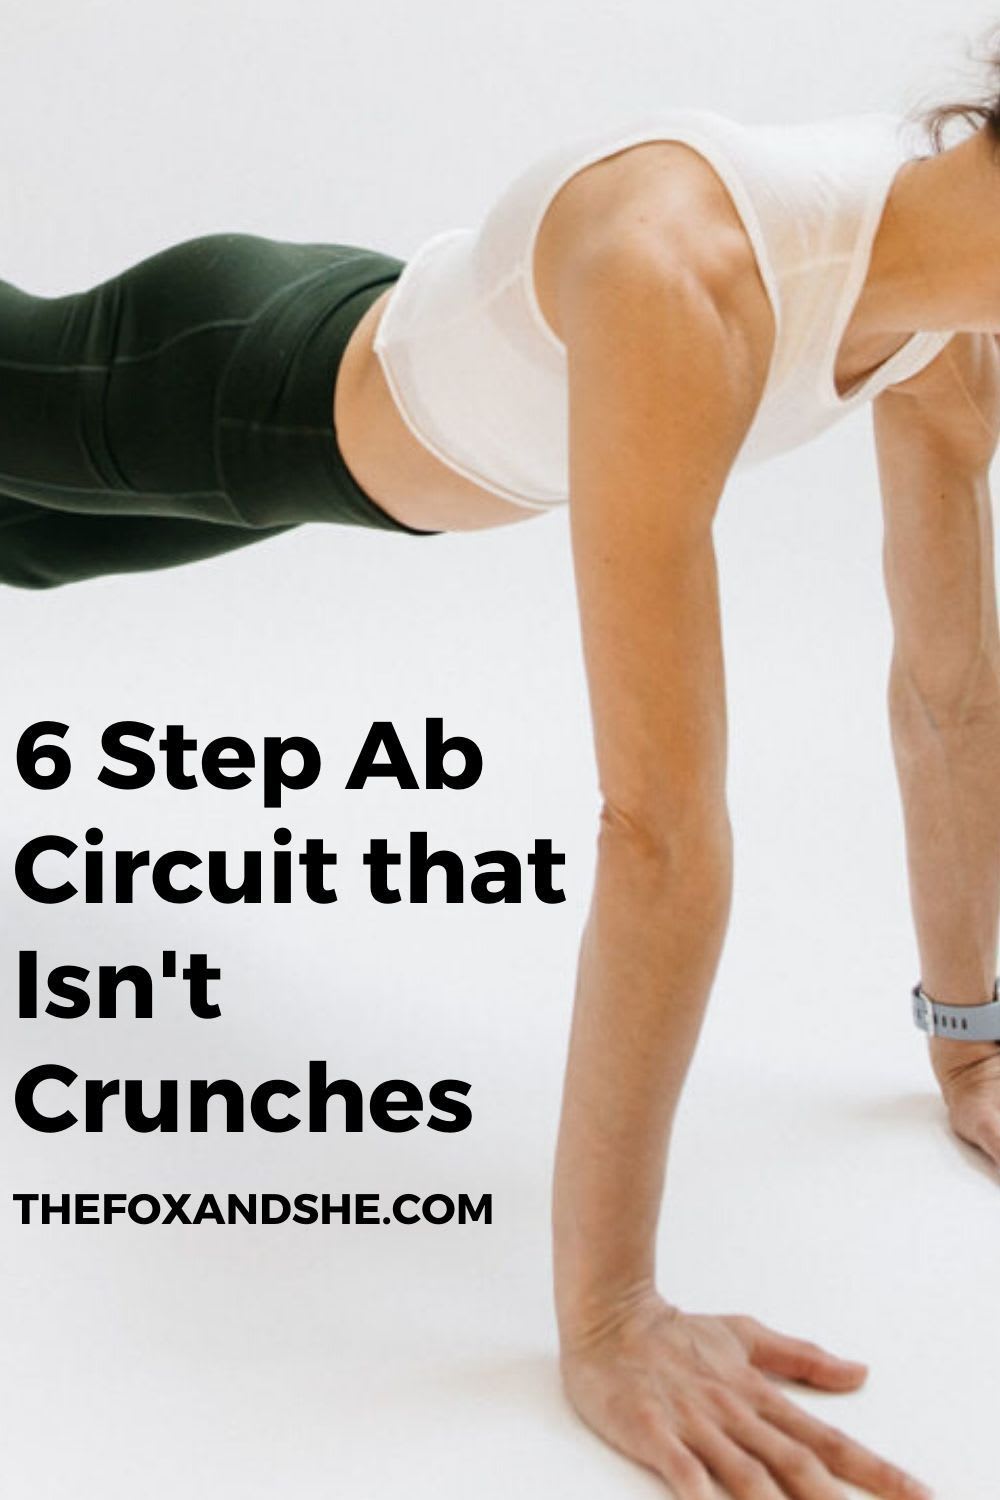 6 Step Ab Circuit that Isn't Crunches